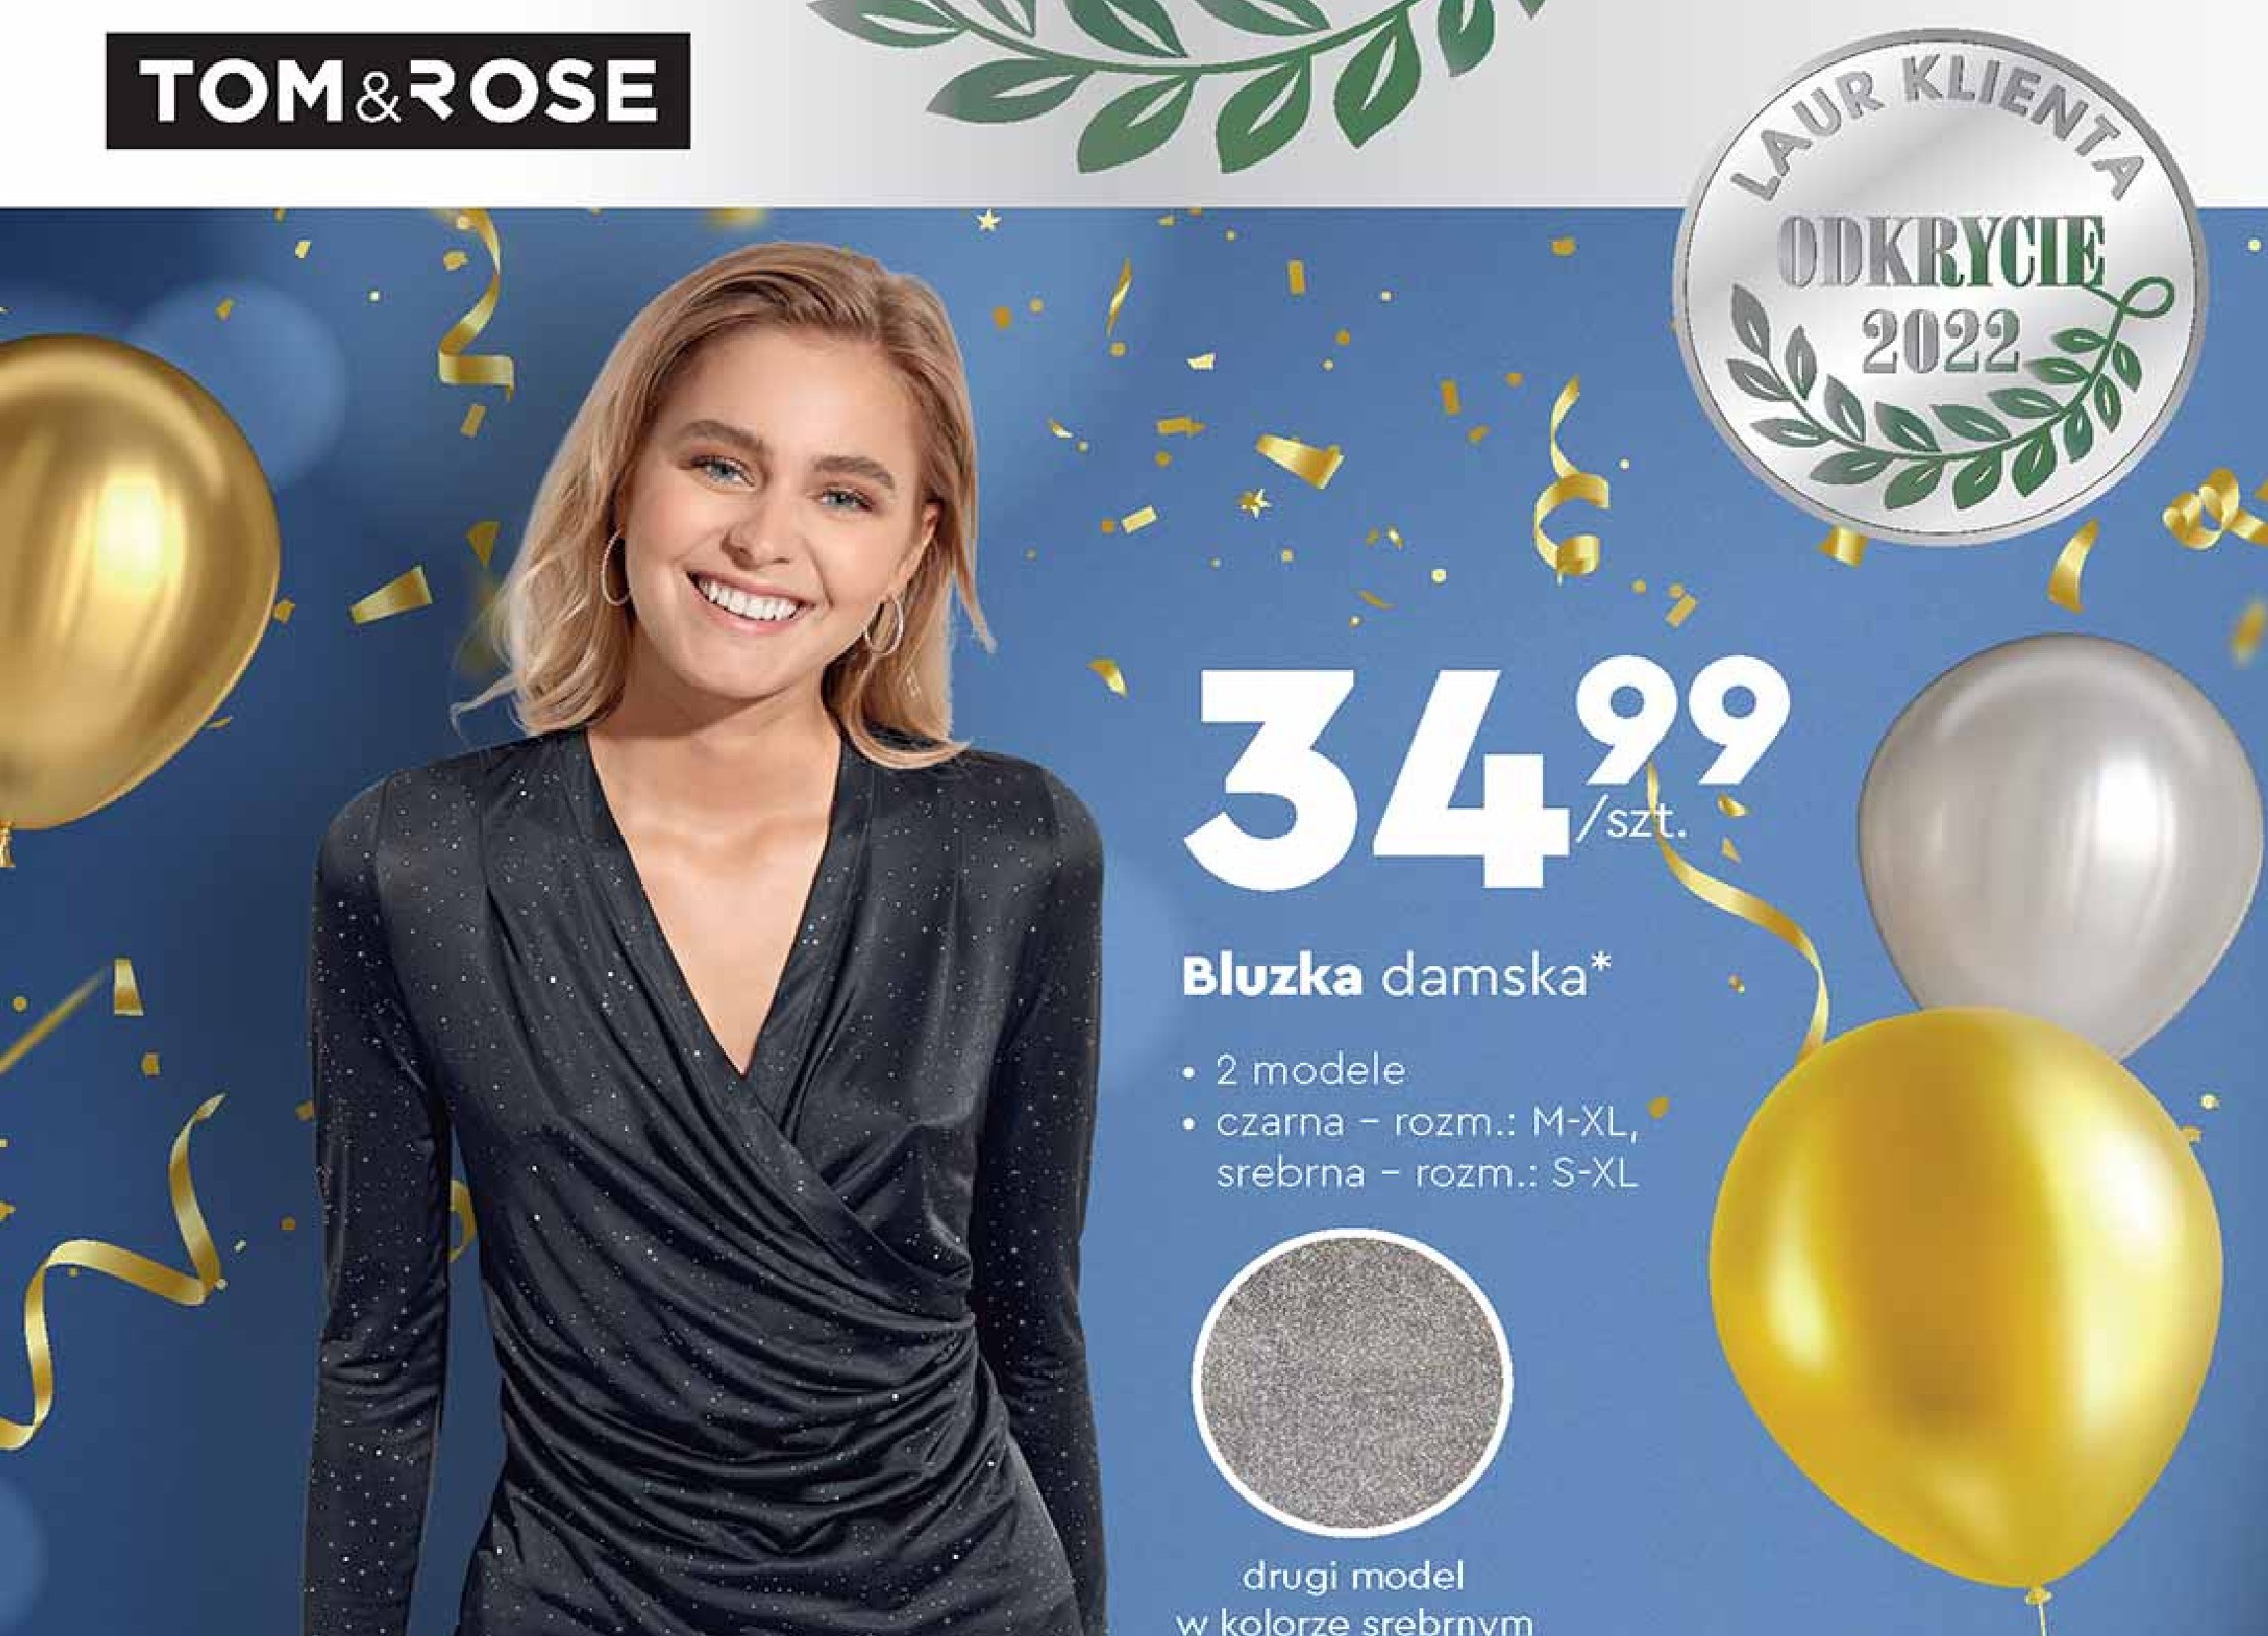 Bluzka damska s-xl srebrna Tom & rose promocja